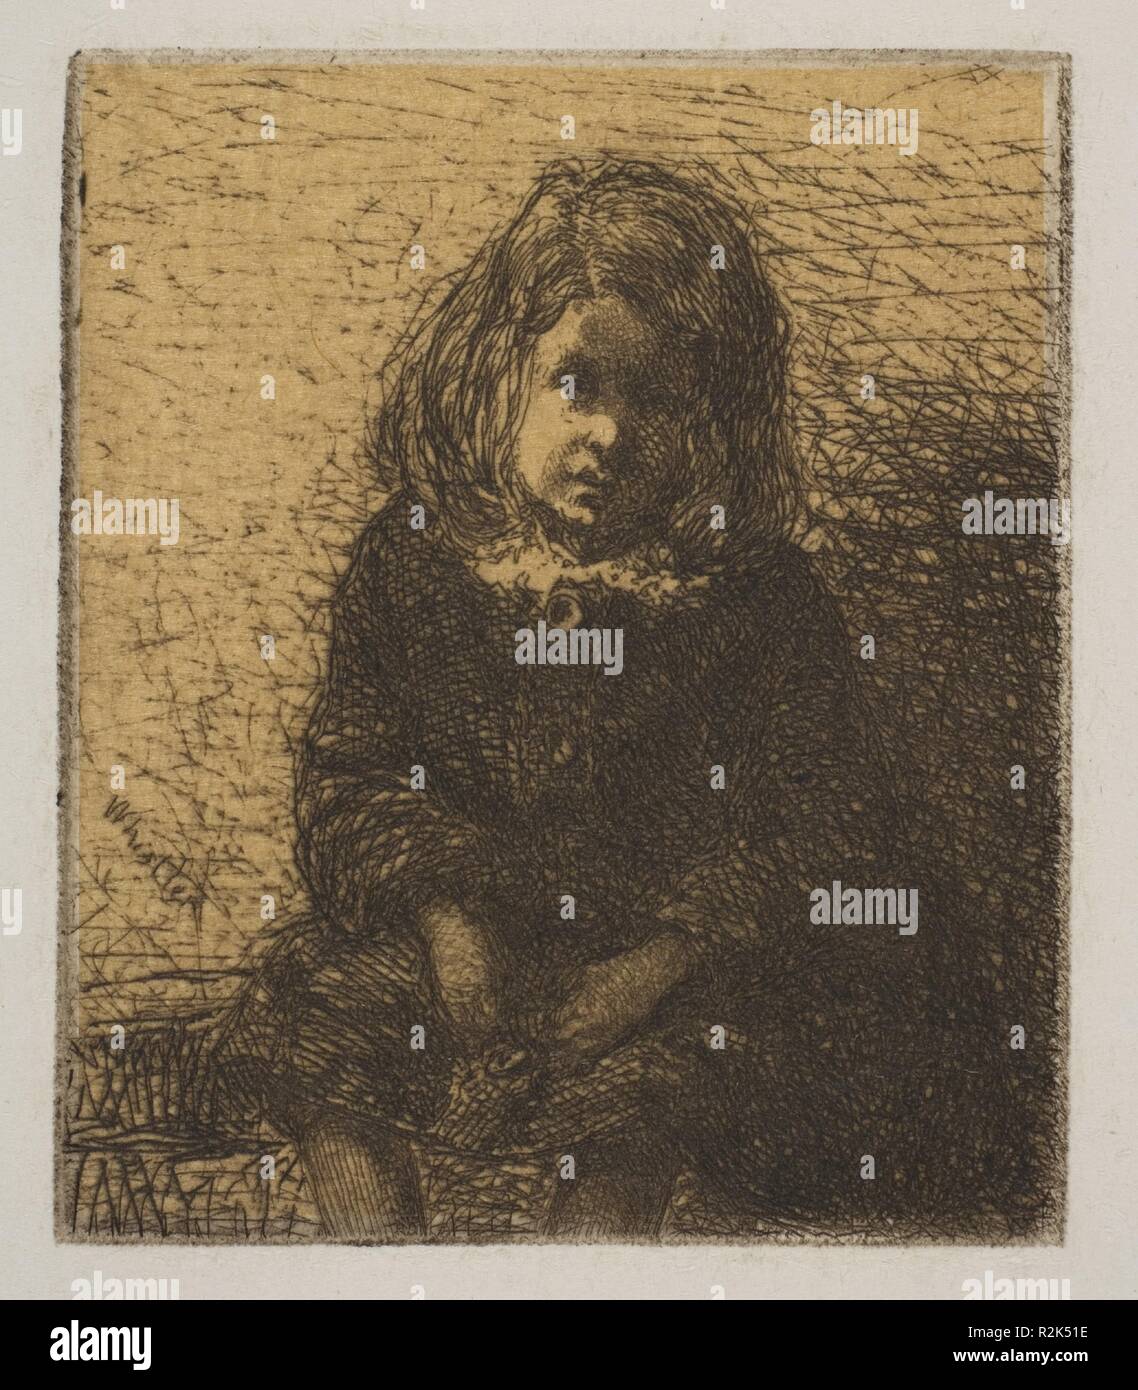 Little Arthur. Artist: James McNeill Whistler (American, Lowell, Massachusetts 1834-1903 London). Dimensions: Plate: 2 5/16 x 1 15/16 in. (5.9 x 4.9 cm)  Sheet: 3 1/16 × 2 11/16 in. (7.8 × 6.9 cm). Series/Portfolio: French Set ('Douze eau-fortes d'apres Nature' 1858). Date: 1857-58. Museum: Metropolitan Museum of Art, New York, USA. Stock Photo